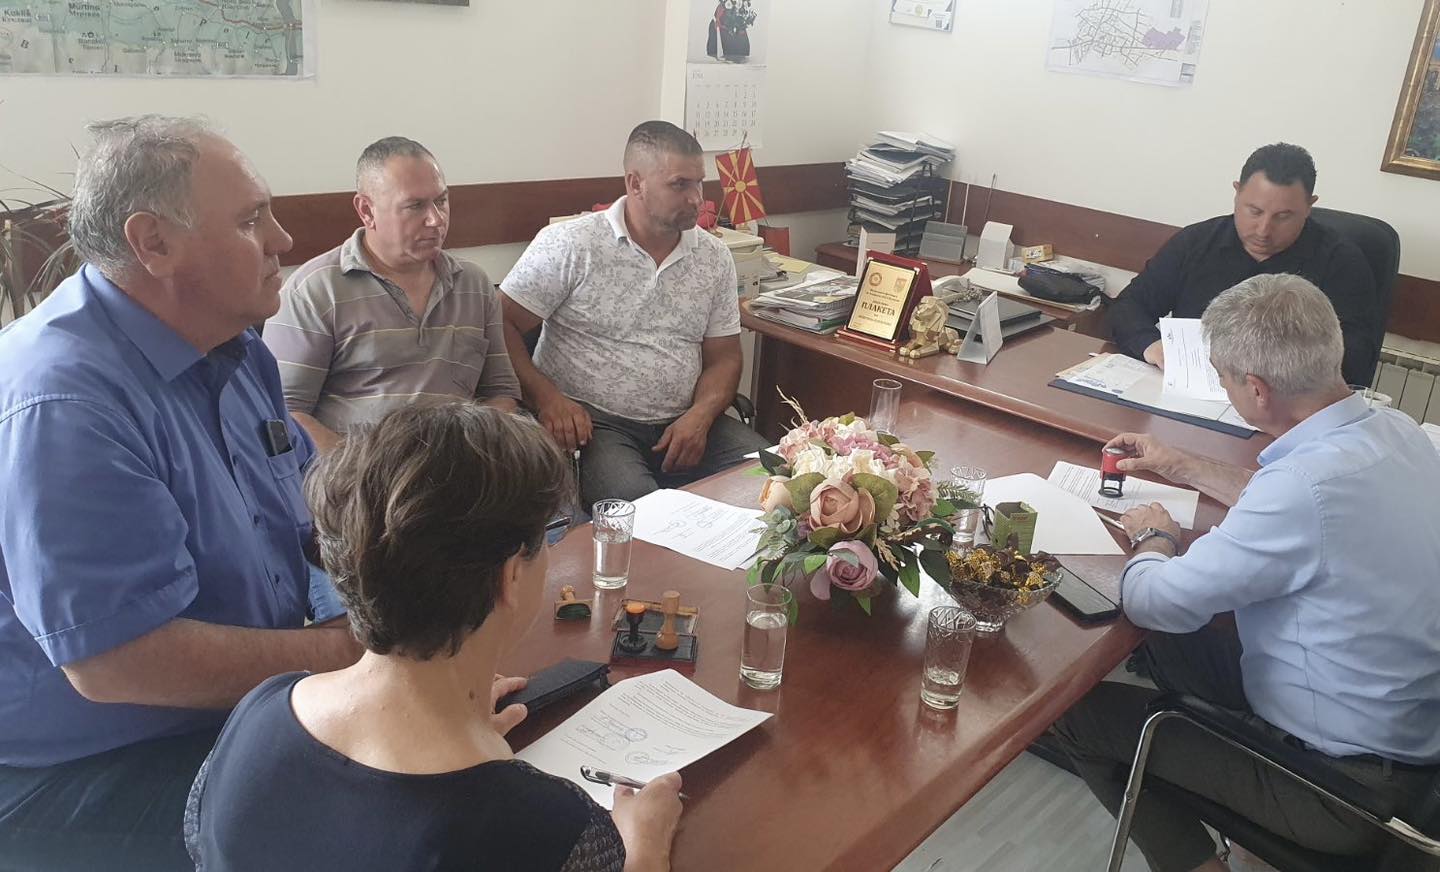 Signed a memorandum of understanding for a new preschool educational center in Bosilovo